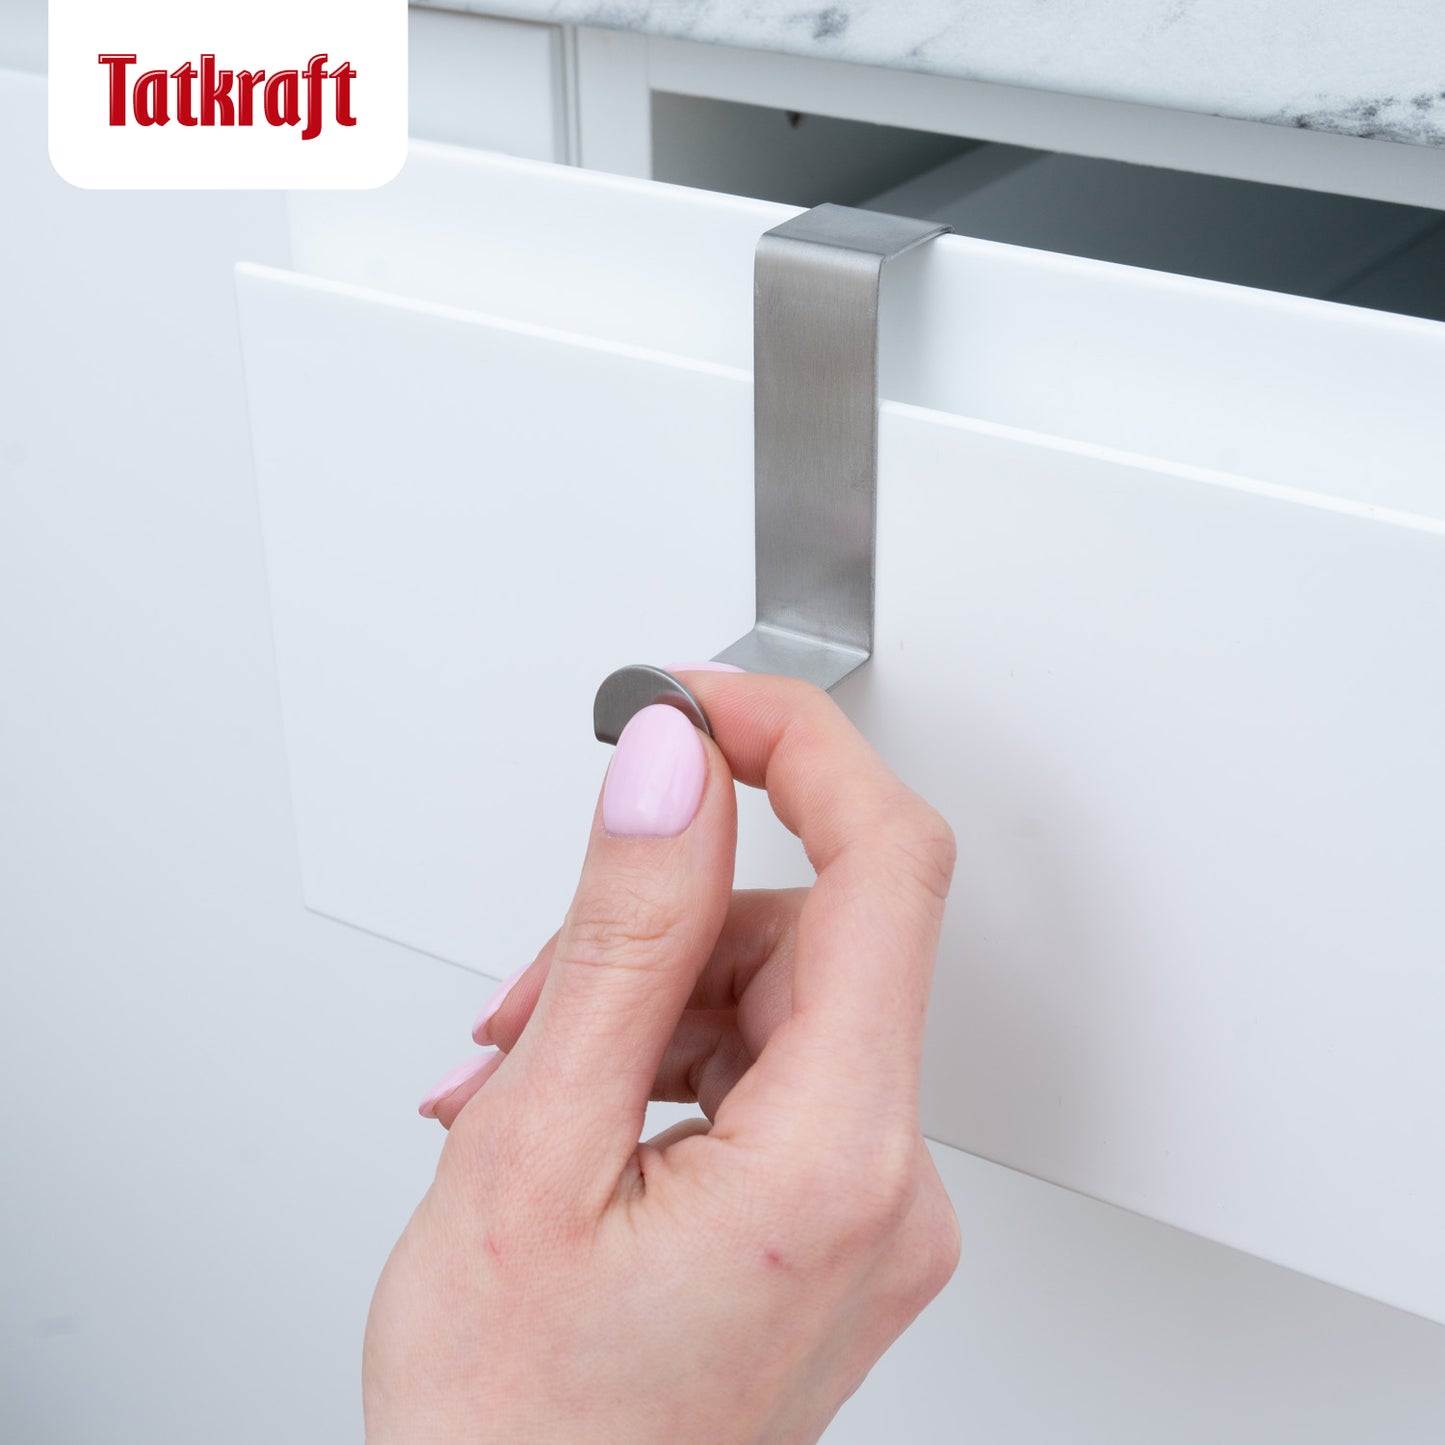 Tatkraft Seger - 10 Over Door Hooks, Stainless Steel, Reversible and Compatible for Cabinet Door Cupboard Drawer Closet, 5 kg 11lbs